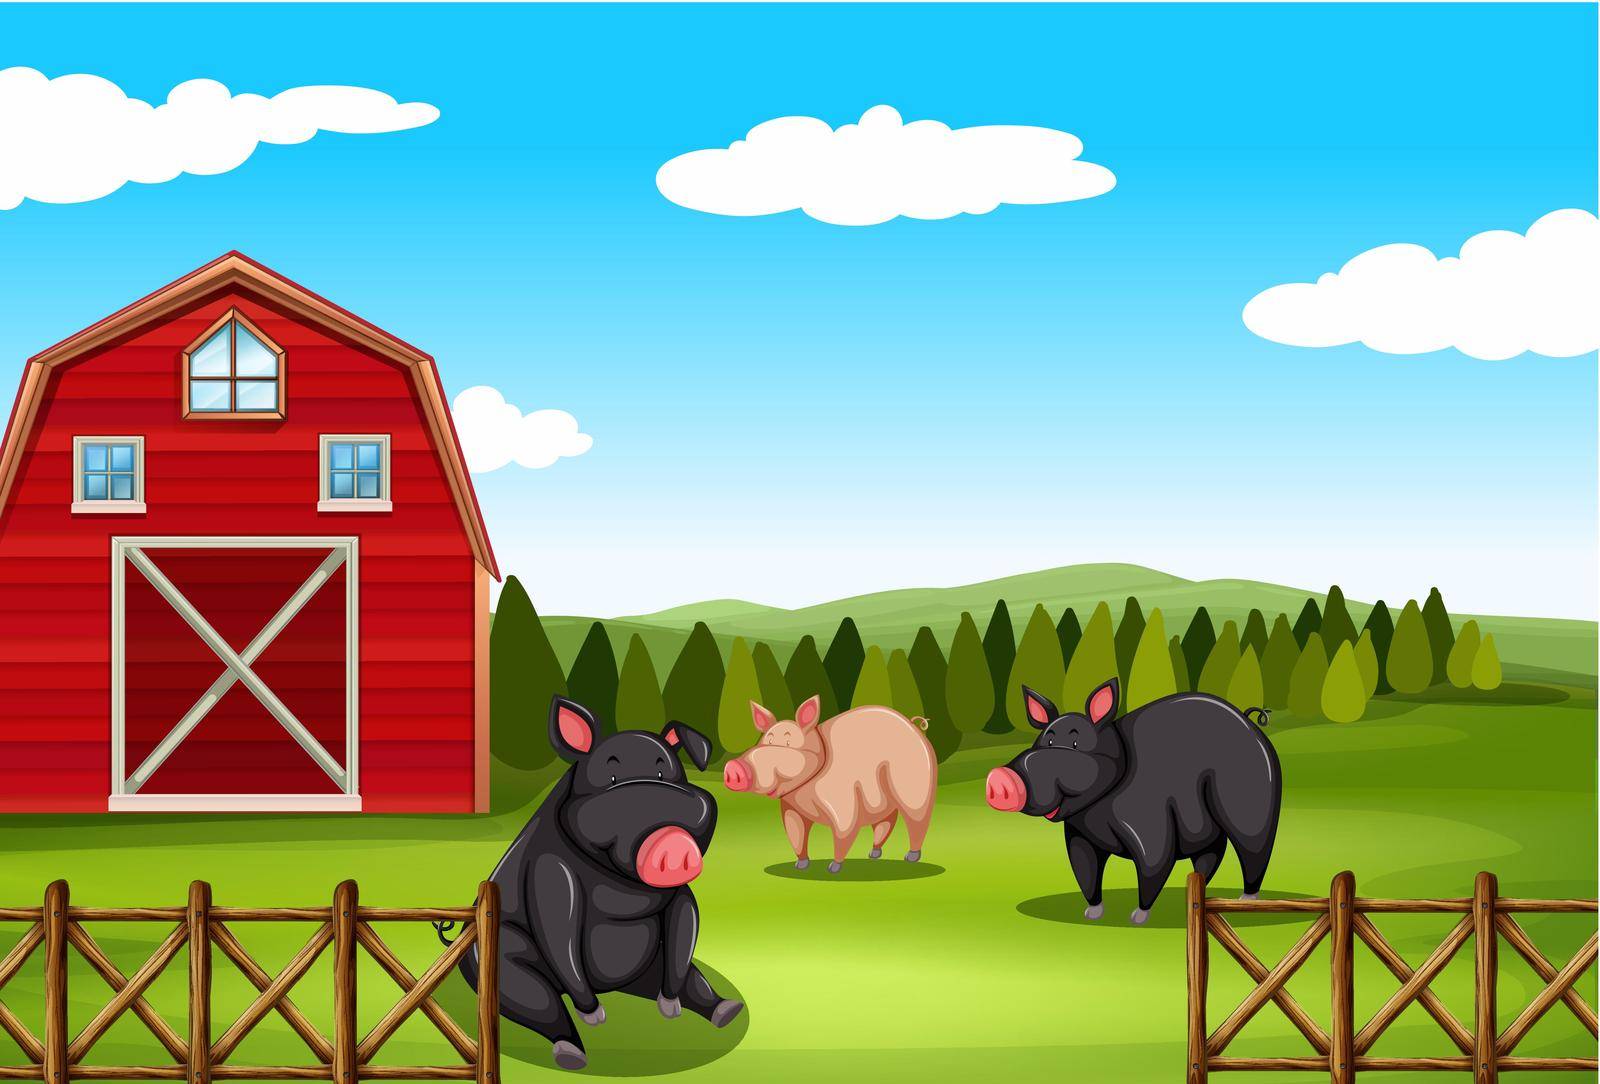 Pigs sitting in a farm field